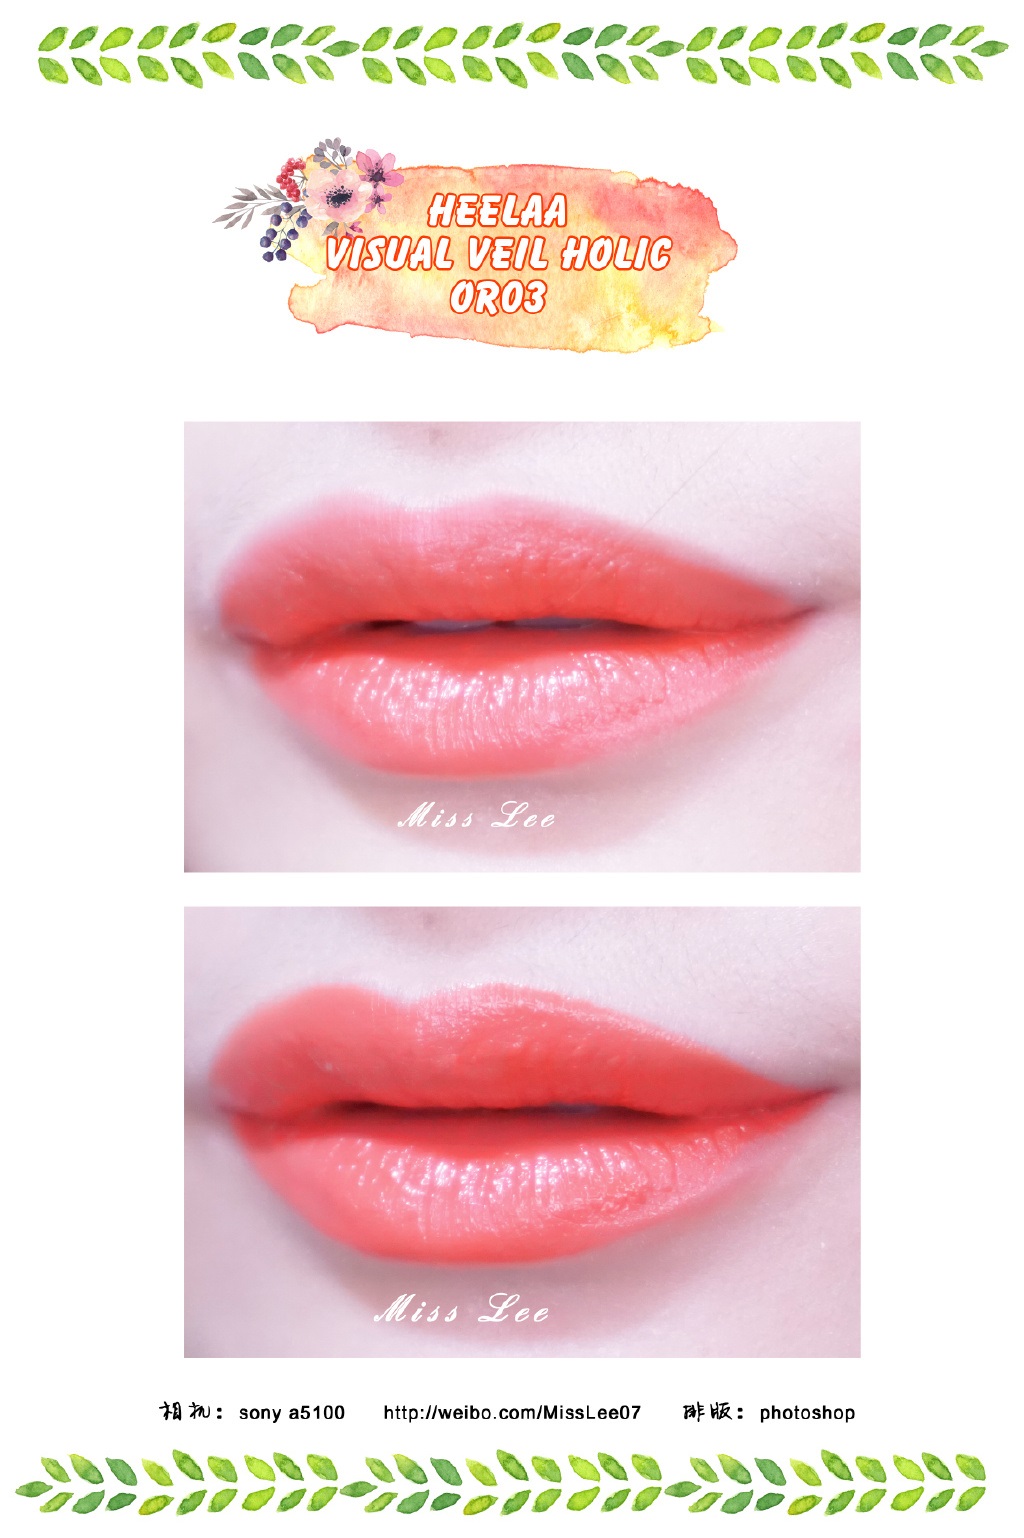 韩国Heelaa唇膏RD02、OR03、TL06试色